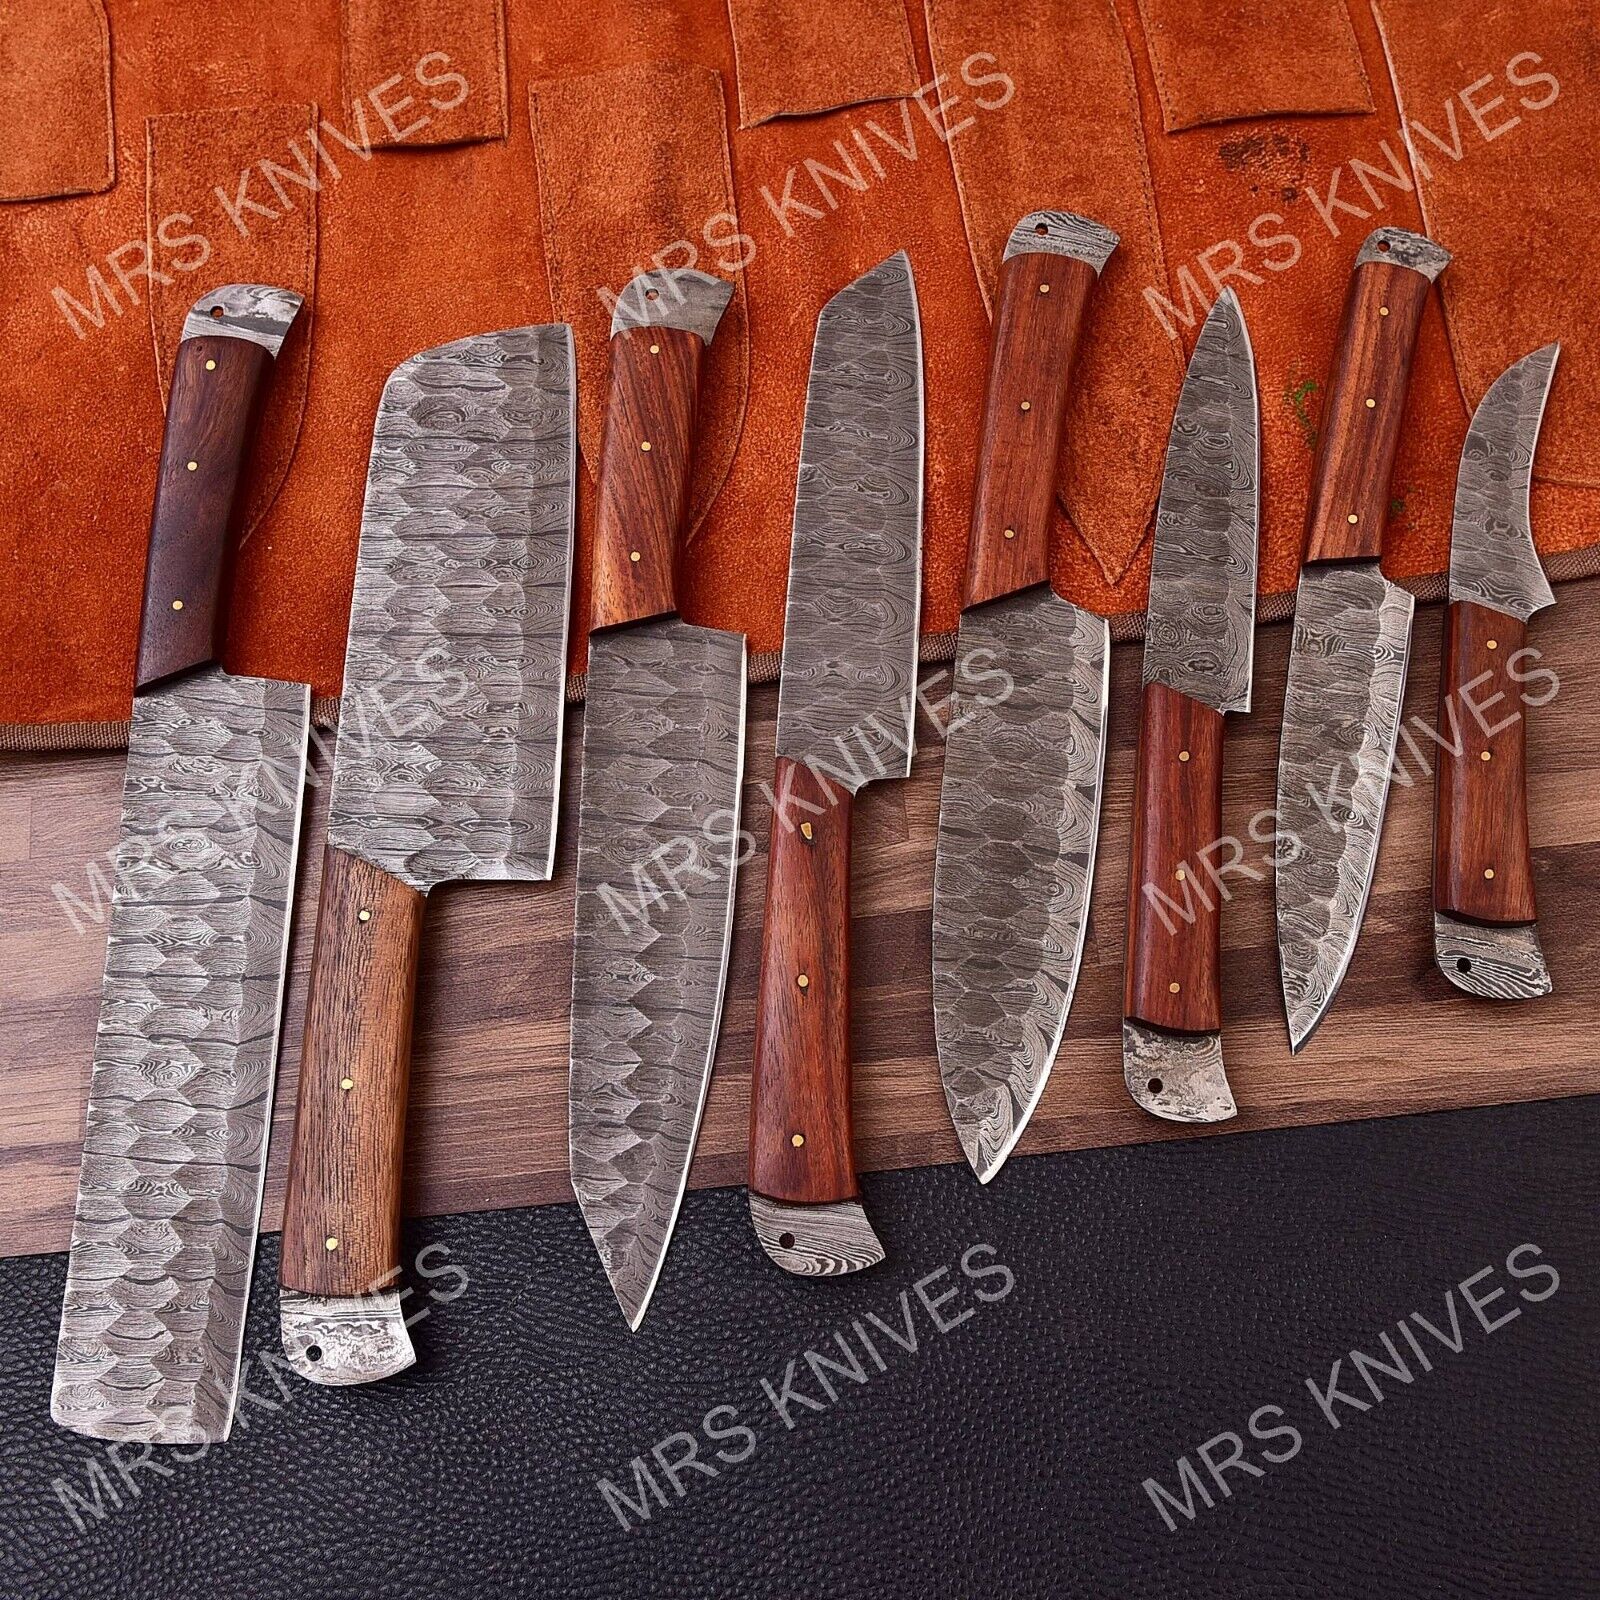 8 PIECES HANDMADE DAMASCUS Steel Full Tang CHEF KNIFE SET W/SHEATH ROSE WOOD